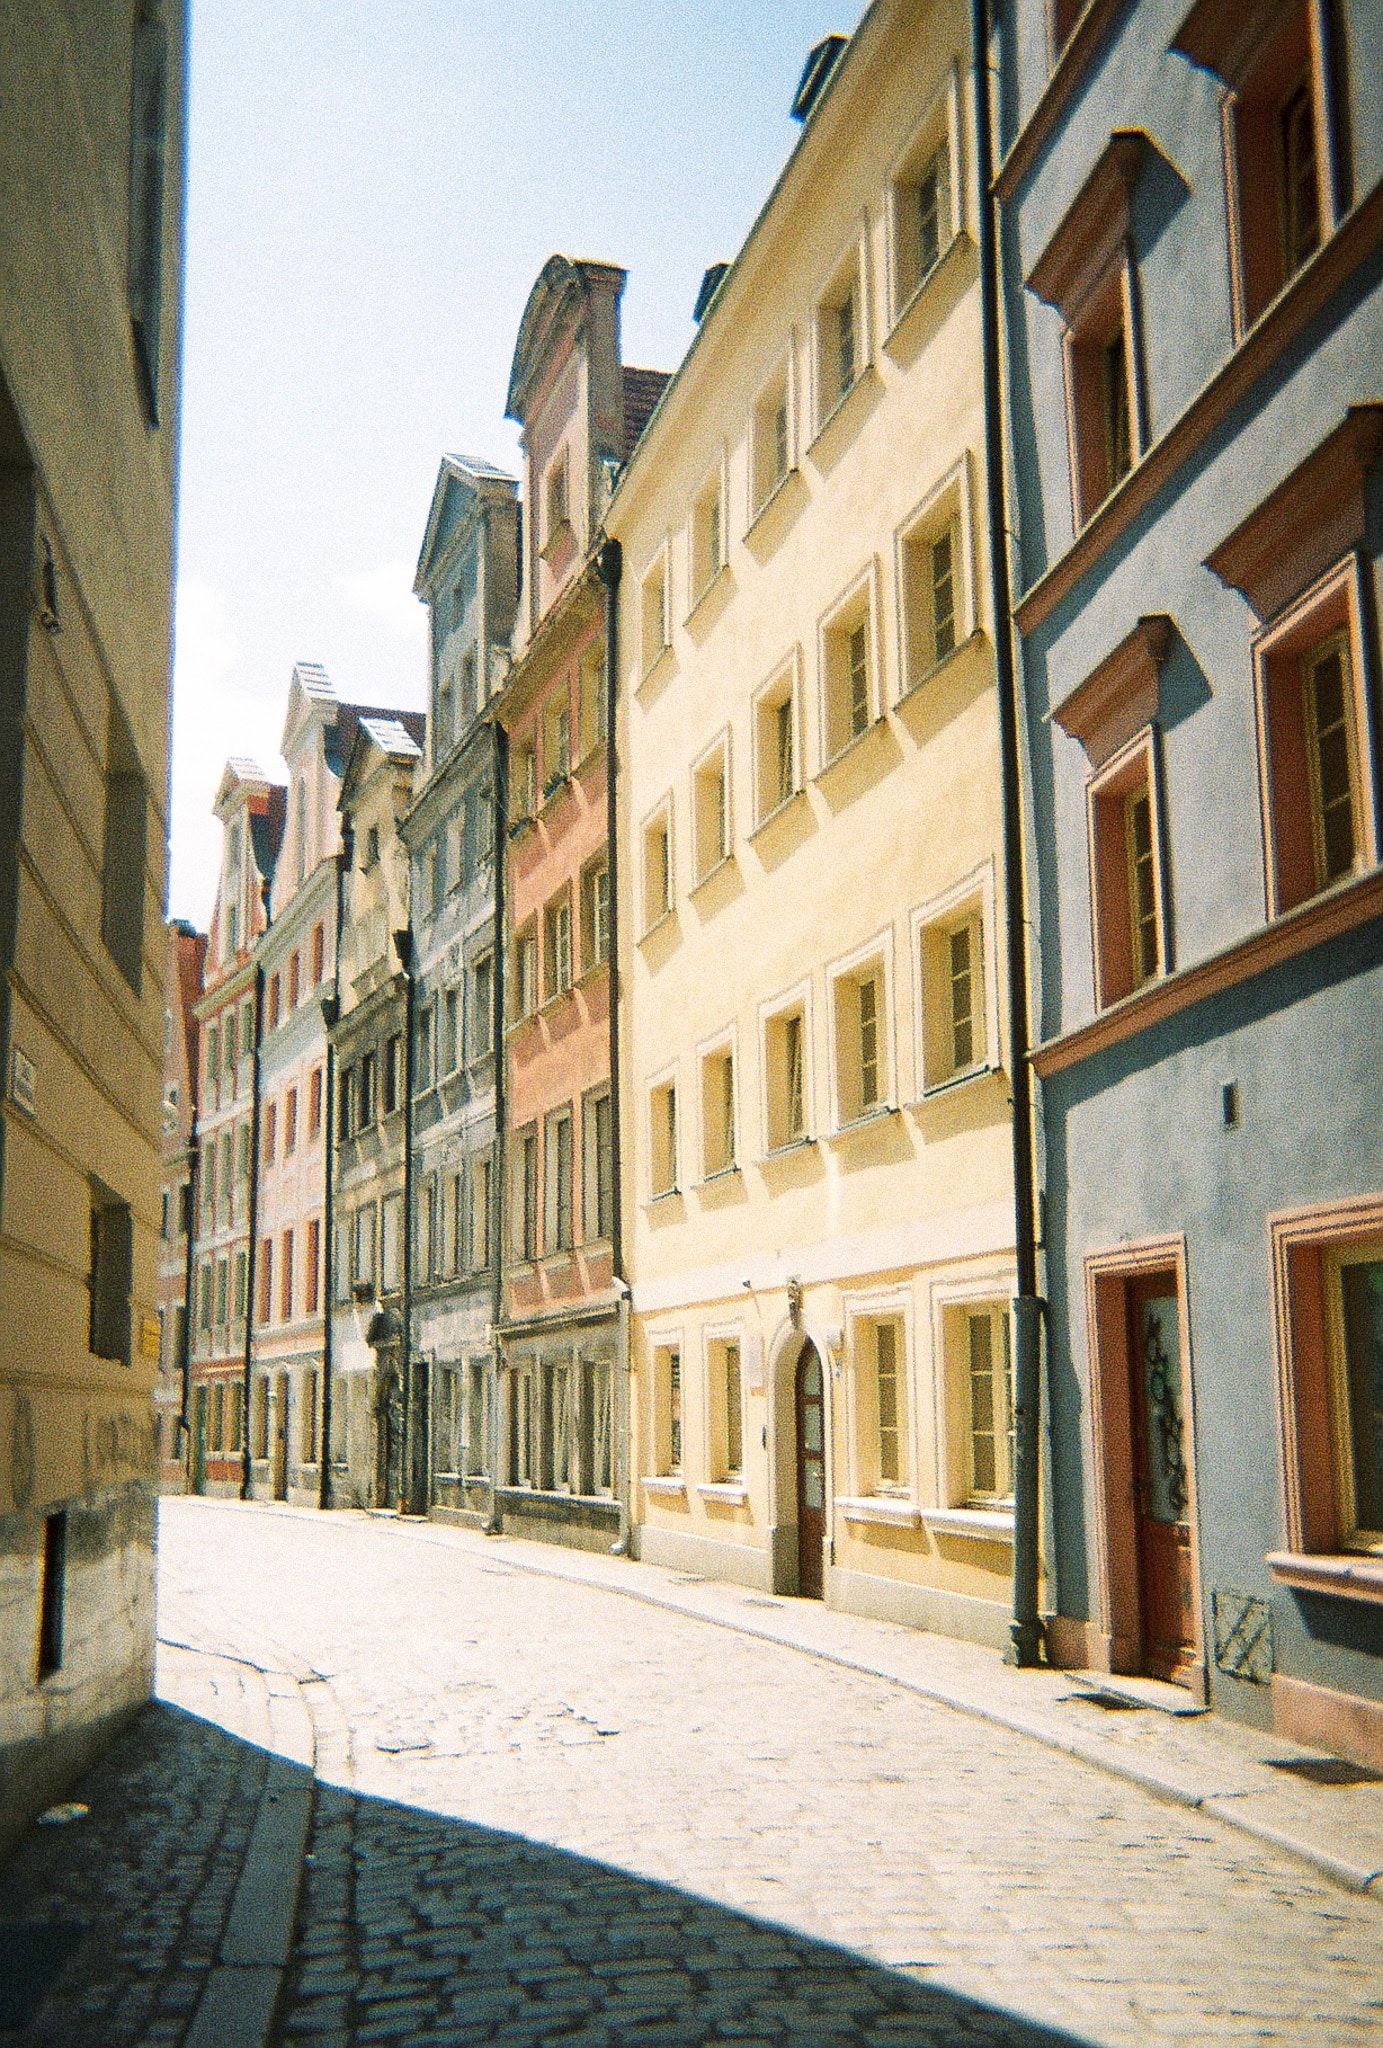 Brick street in Wrocław, Poland by Frankee Lyons.